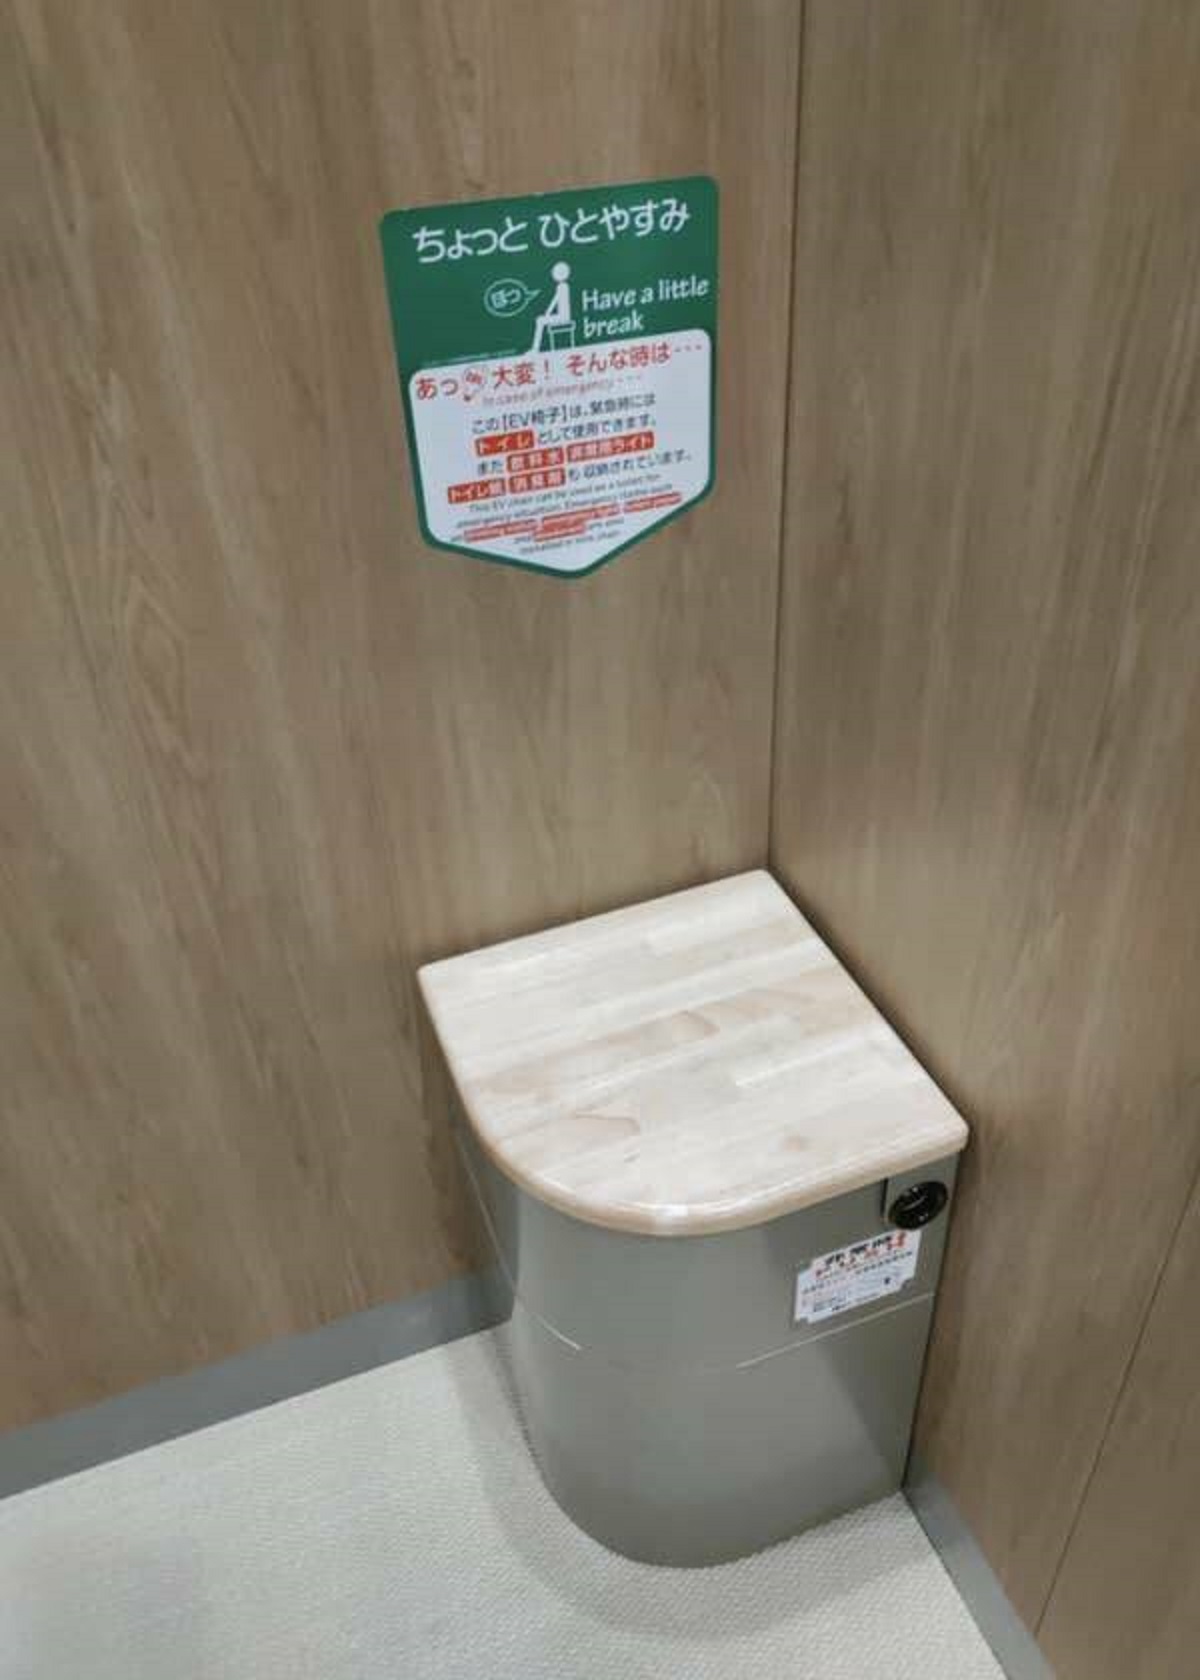 Japan has emergency toilets in elevators. Just in case.